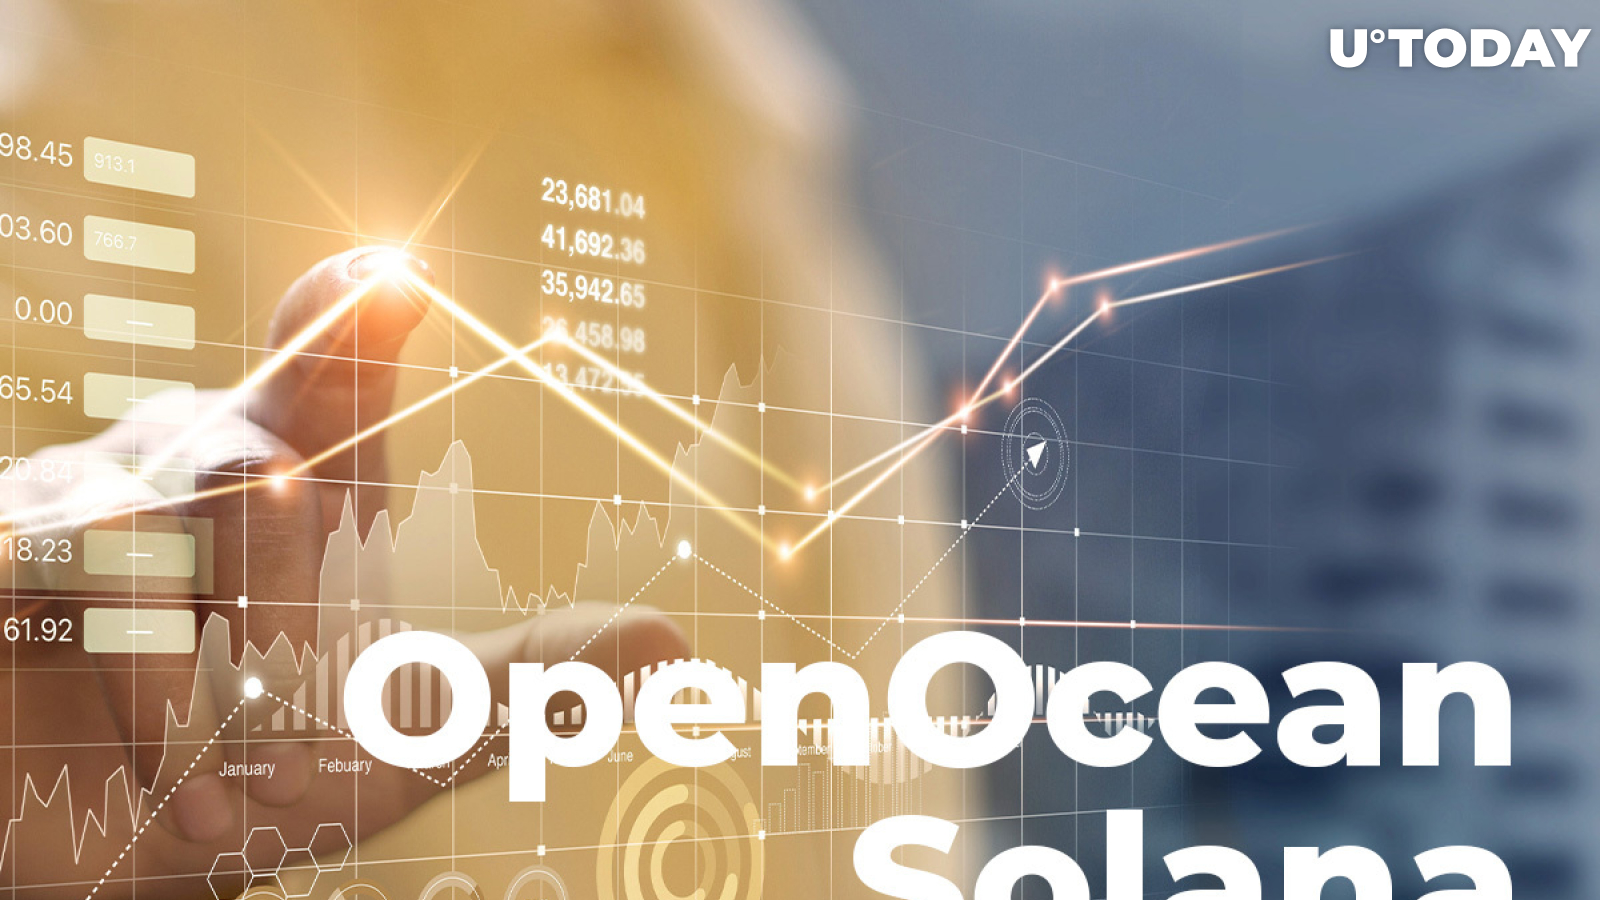 OpenOcean (OOE) DeFi/CeFi Aggregator Expands to Solana (SOL): Details